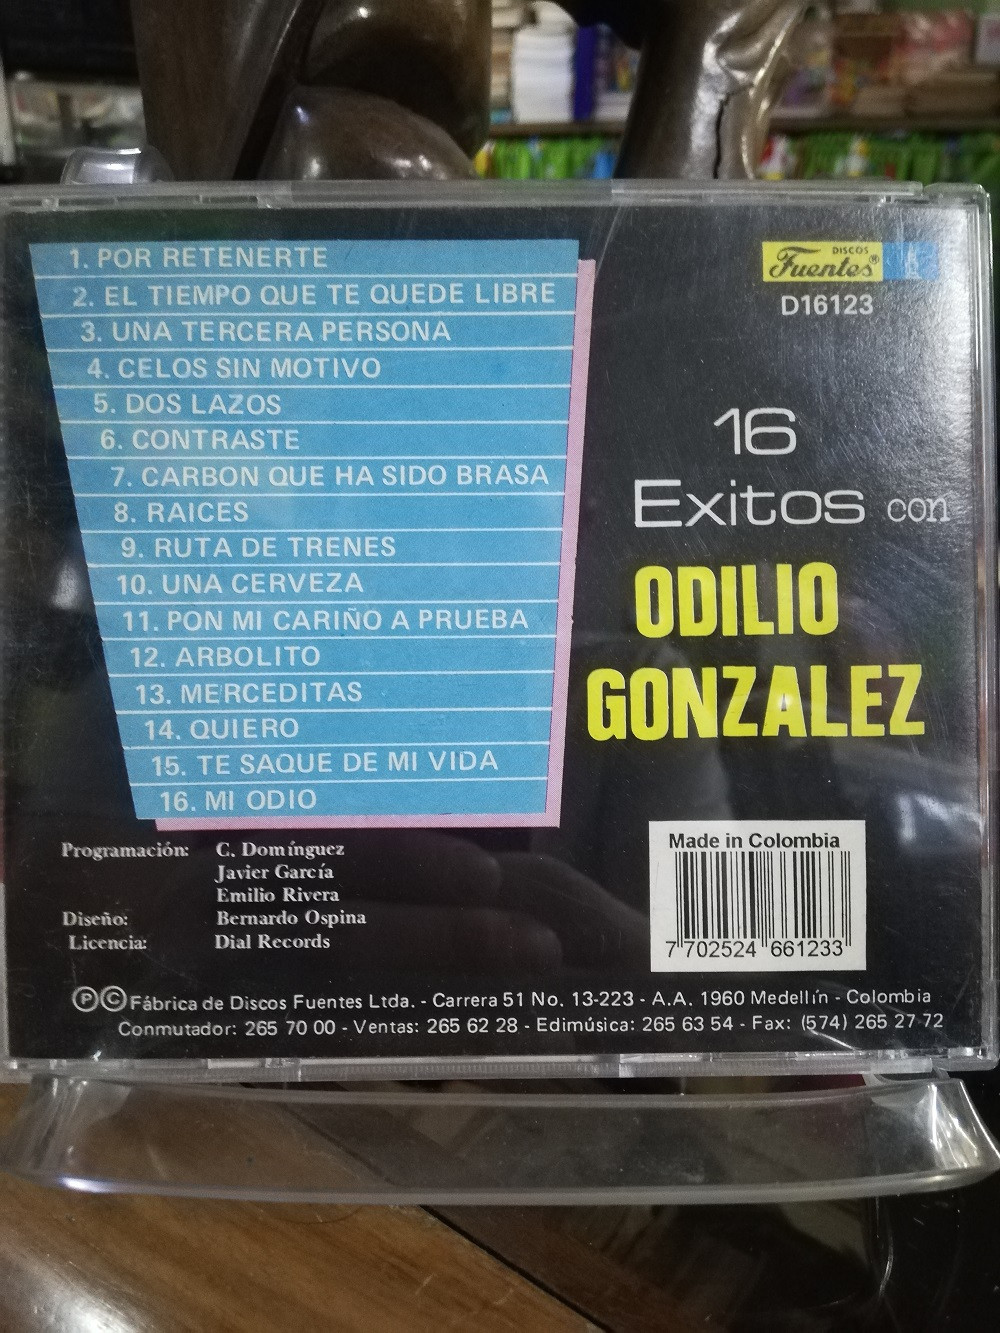 Imagen CD ODILIO GONZALEZ - 16 EXITOS 2